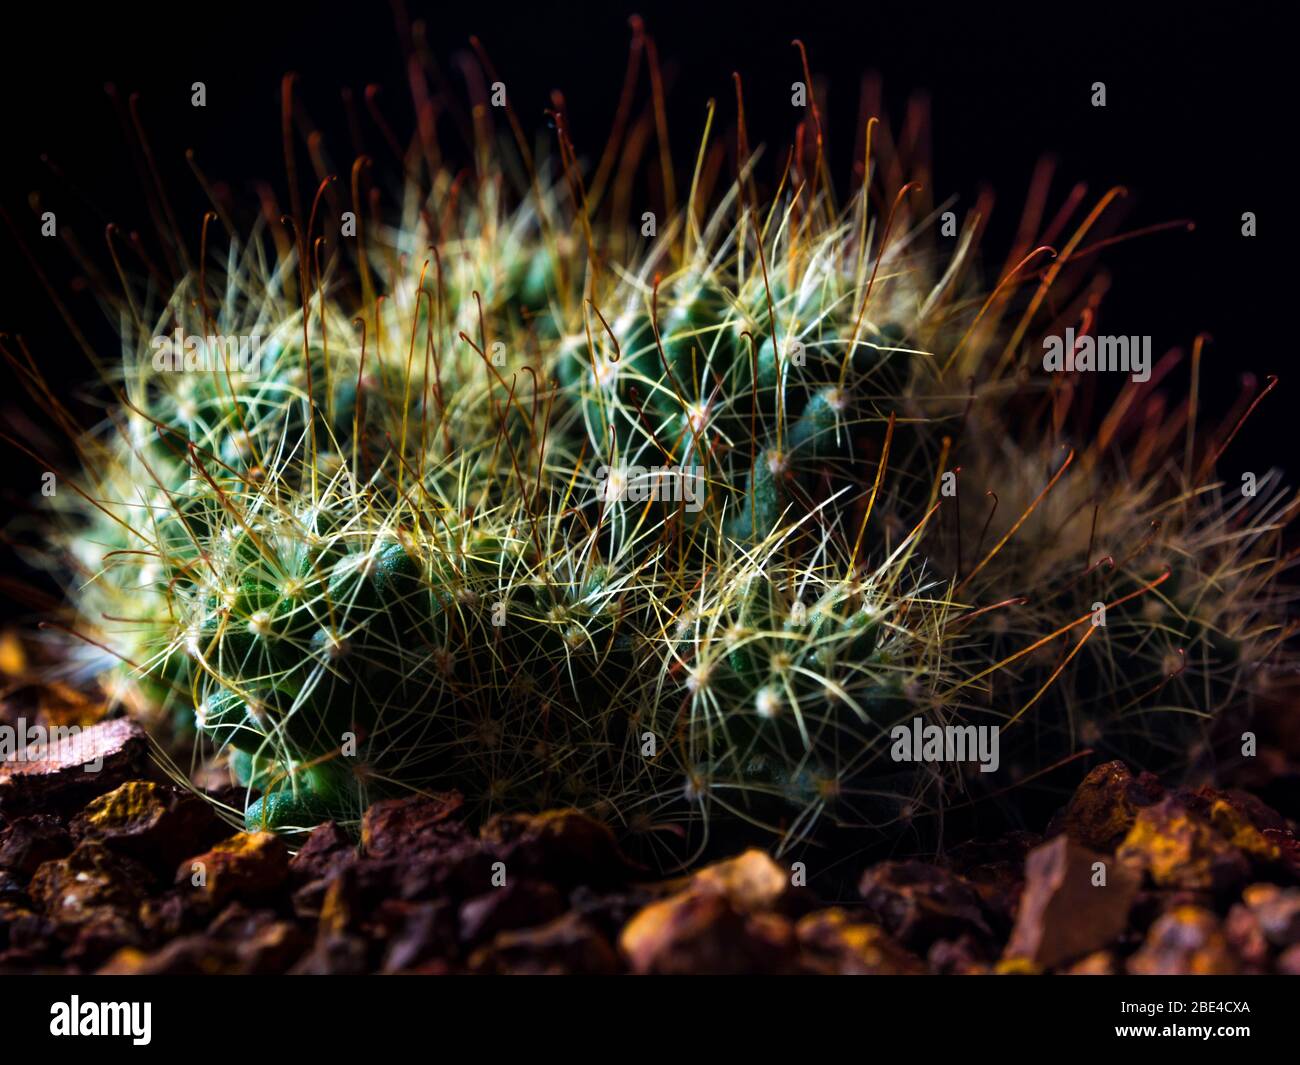 Clump of Thorn hook Mammillaria surculosa cactus species in black background Stock Photo